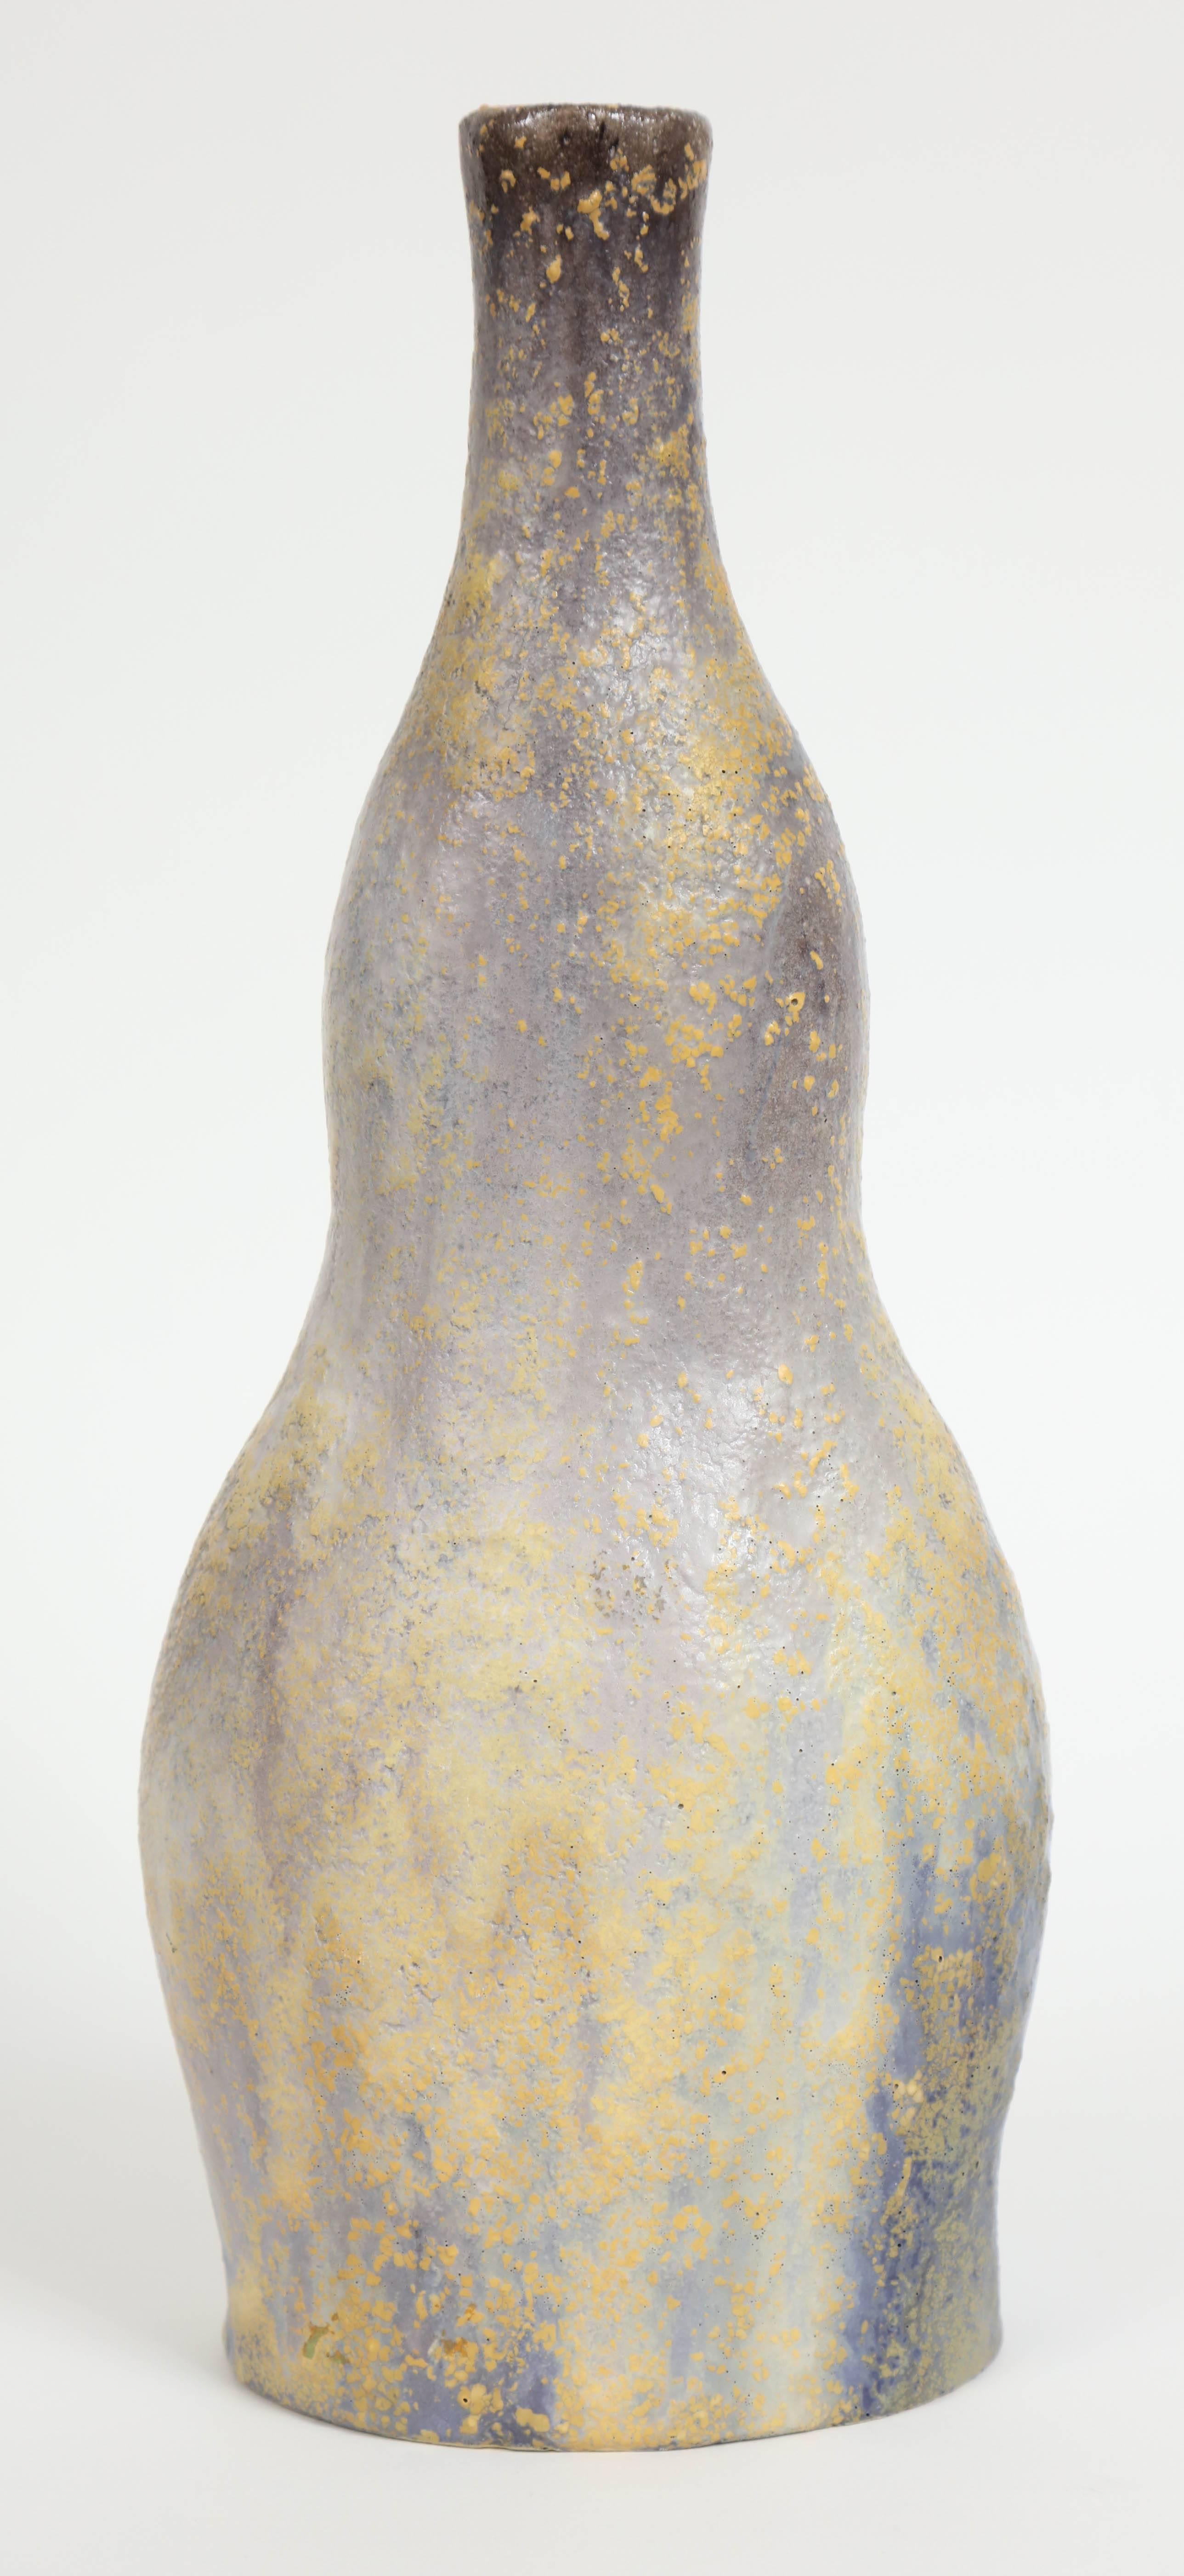 Marcello Fantoni Ceramic Bottle Vase, Glazed Stoneware, circa 1970s For Sale 3